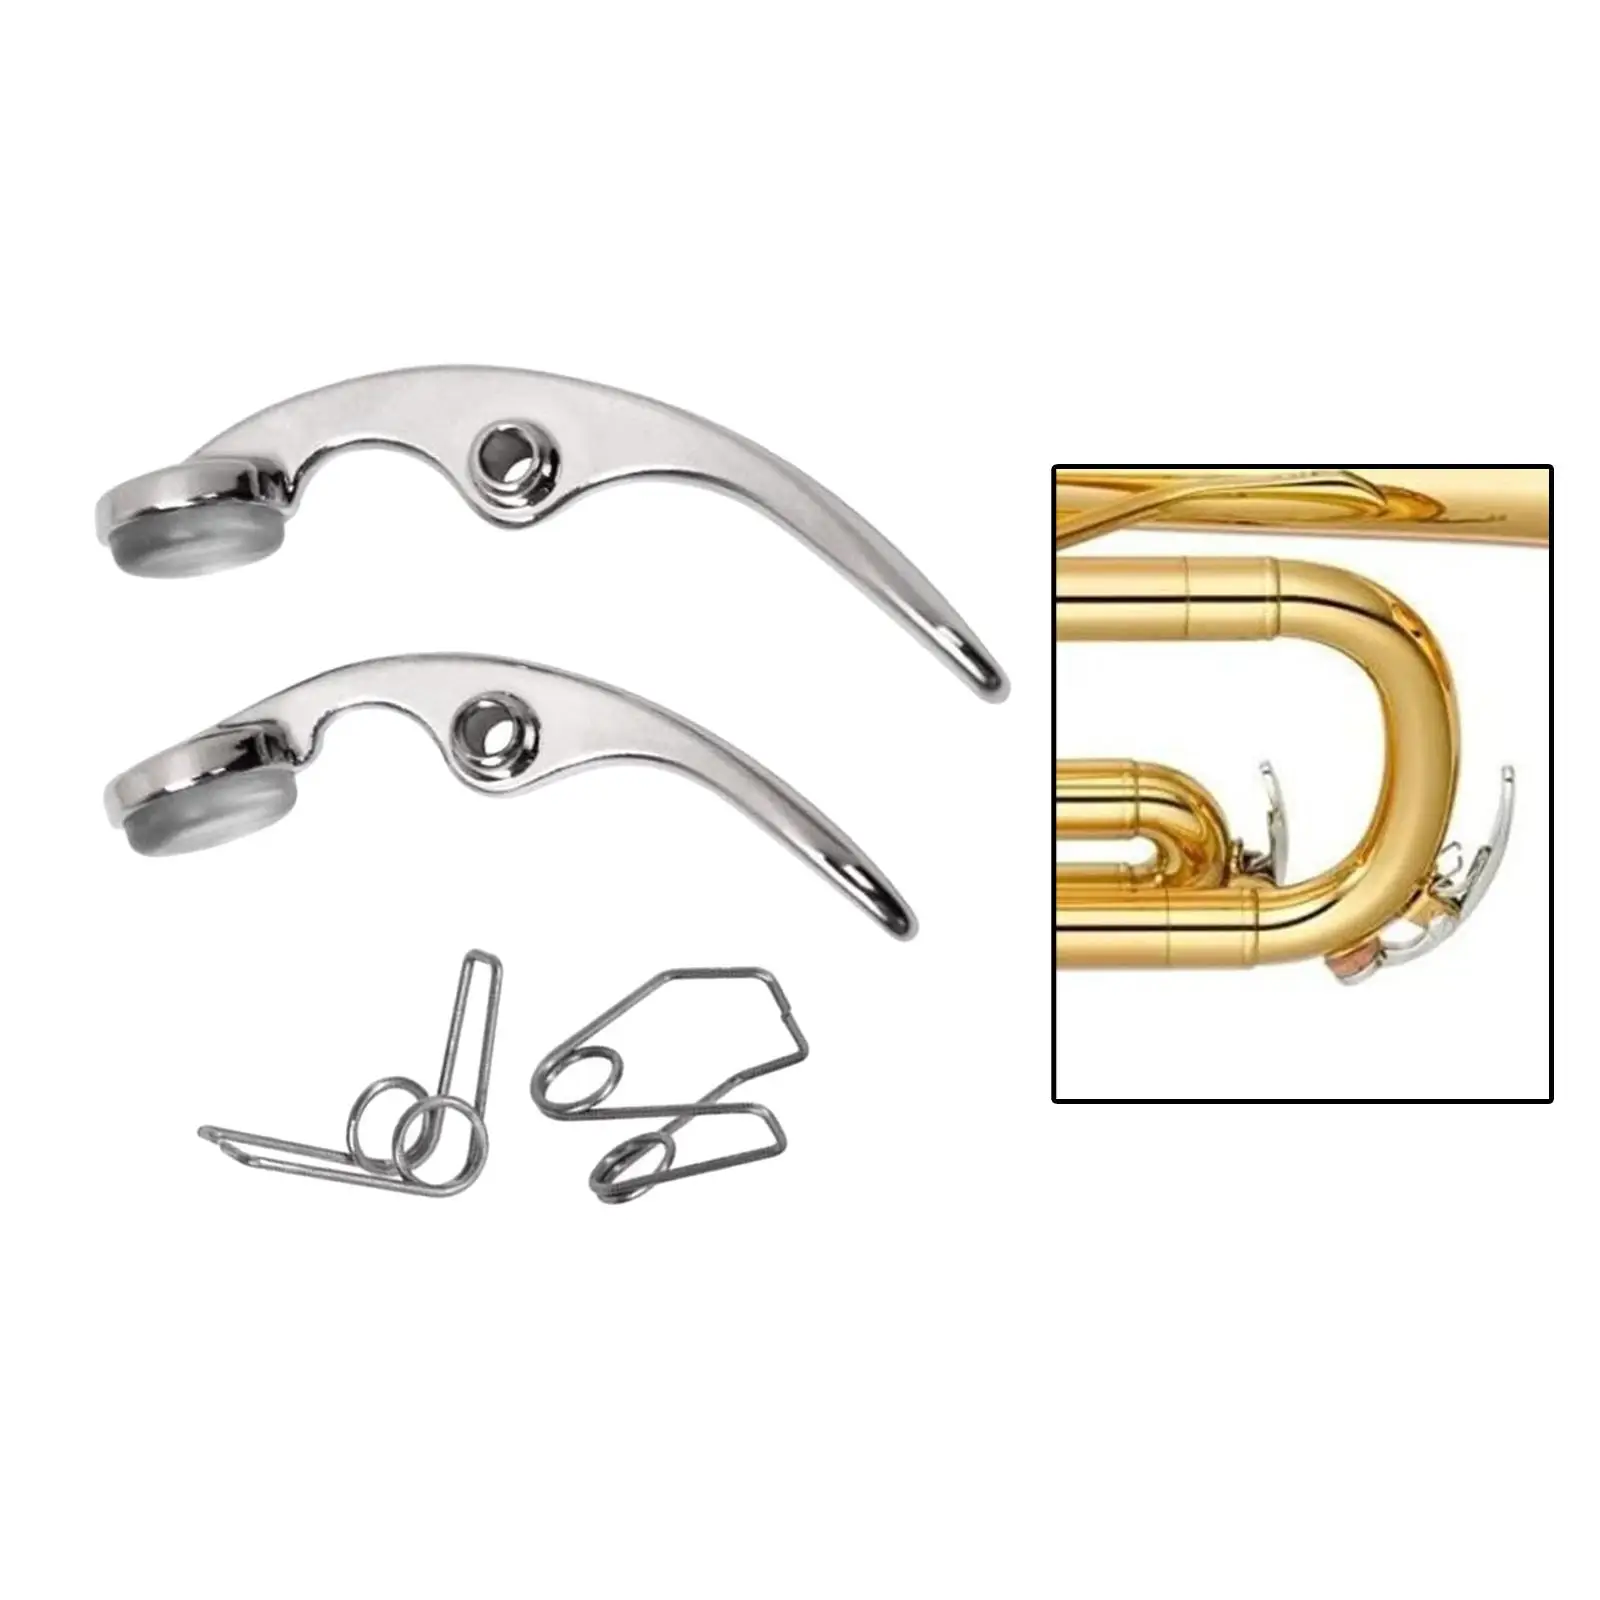 Trumpet Water Key Portable Repair Kits for Trombone Trumpet Wind Instrument